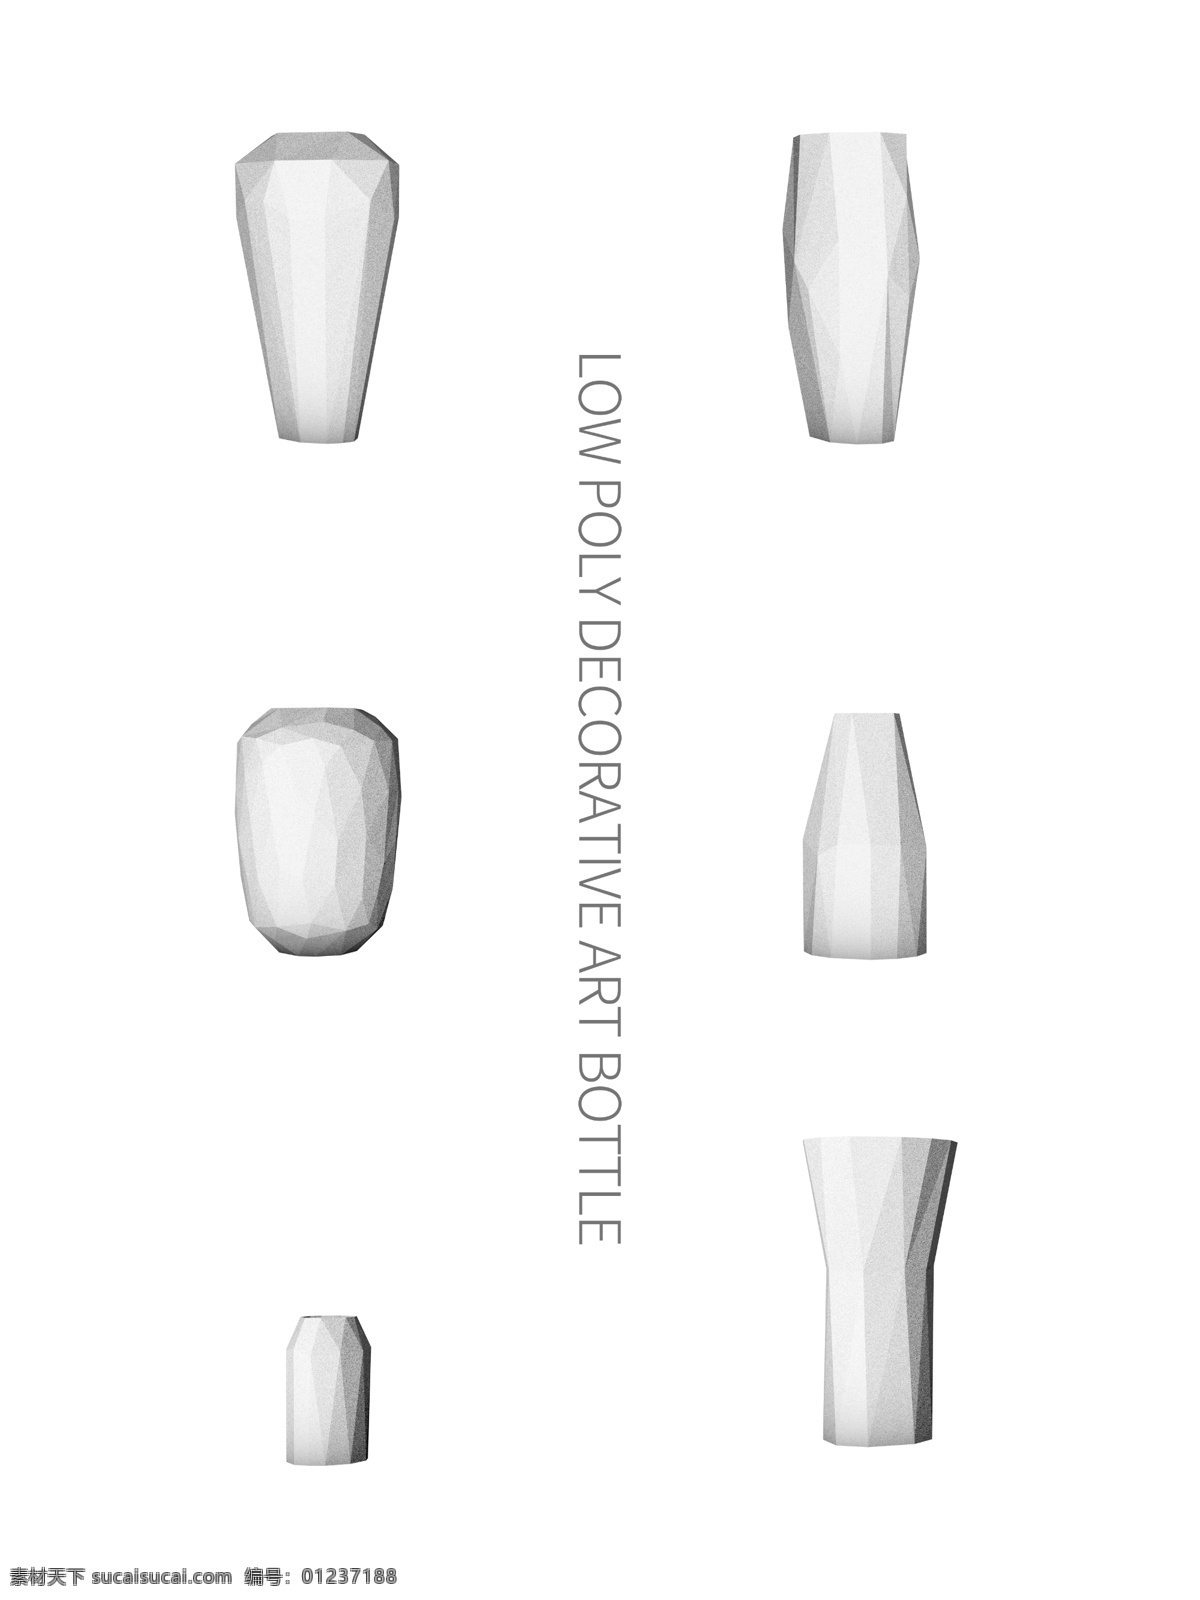 lowpoly 白色 质感 极 简 低 体 装饰 瓶 花瓶 瓶子 摆件 装饰物 生活用品 白色质感 极简 低面体 装饰瓶 磨砂质感 个性艺术